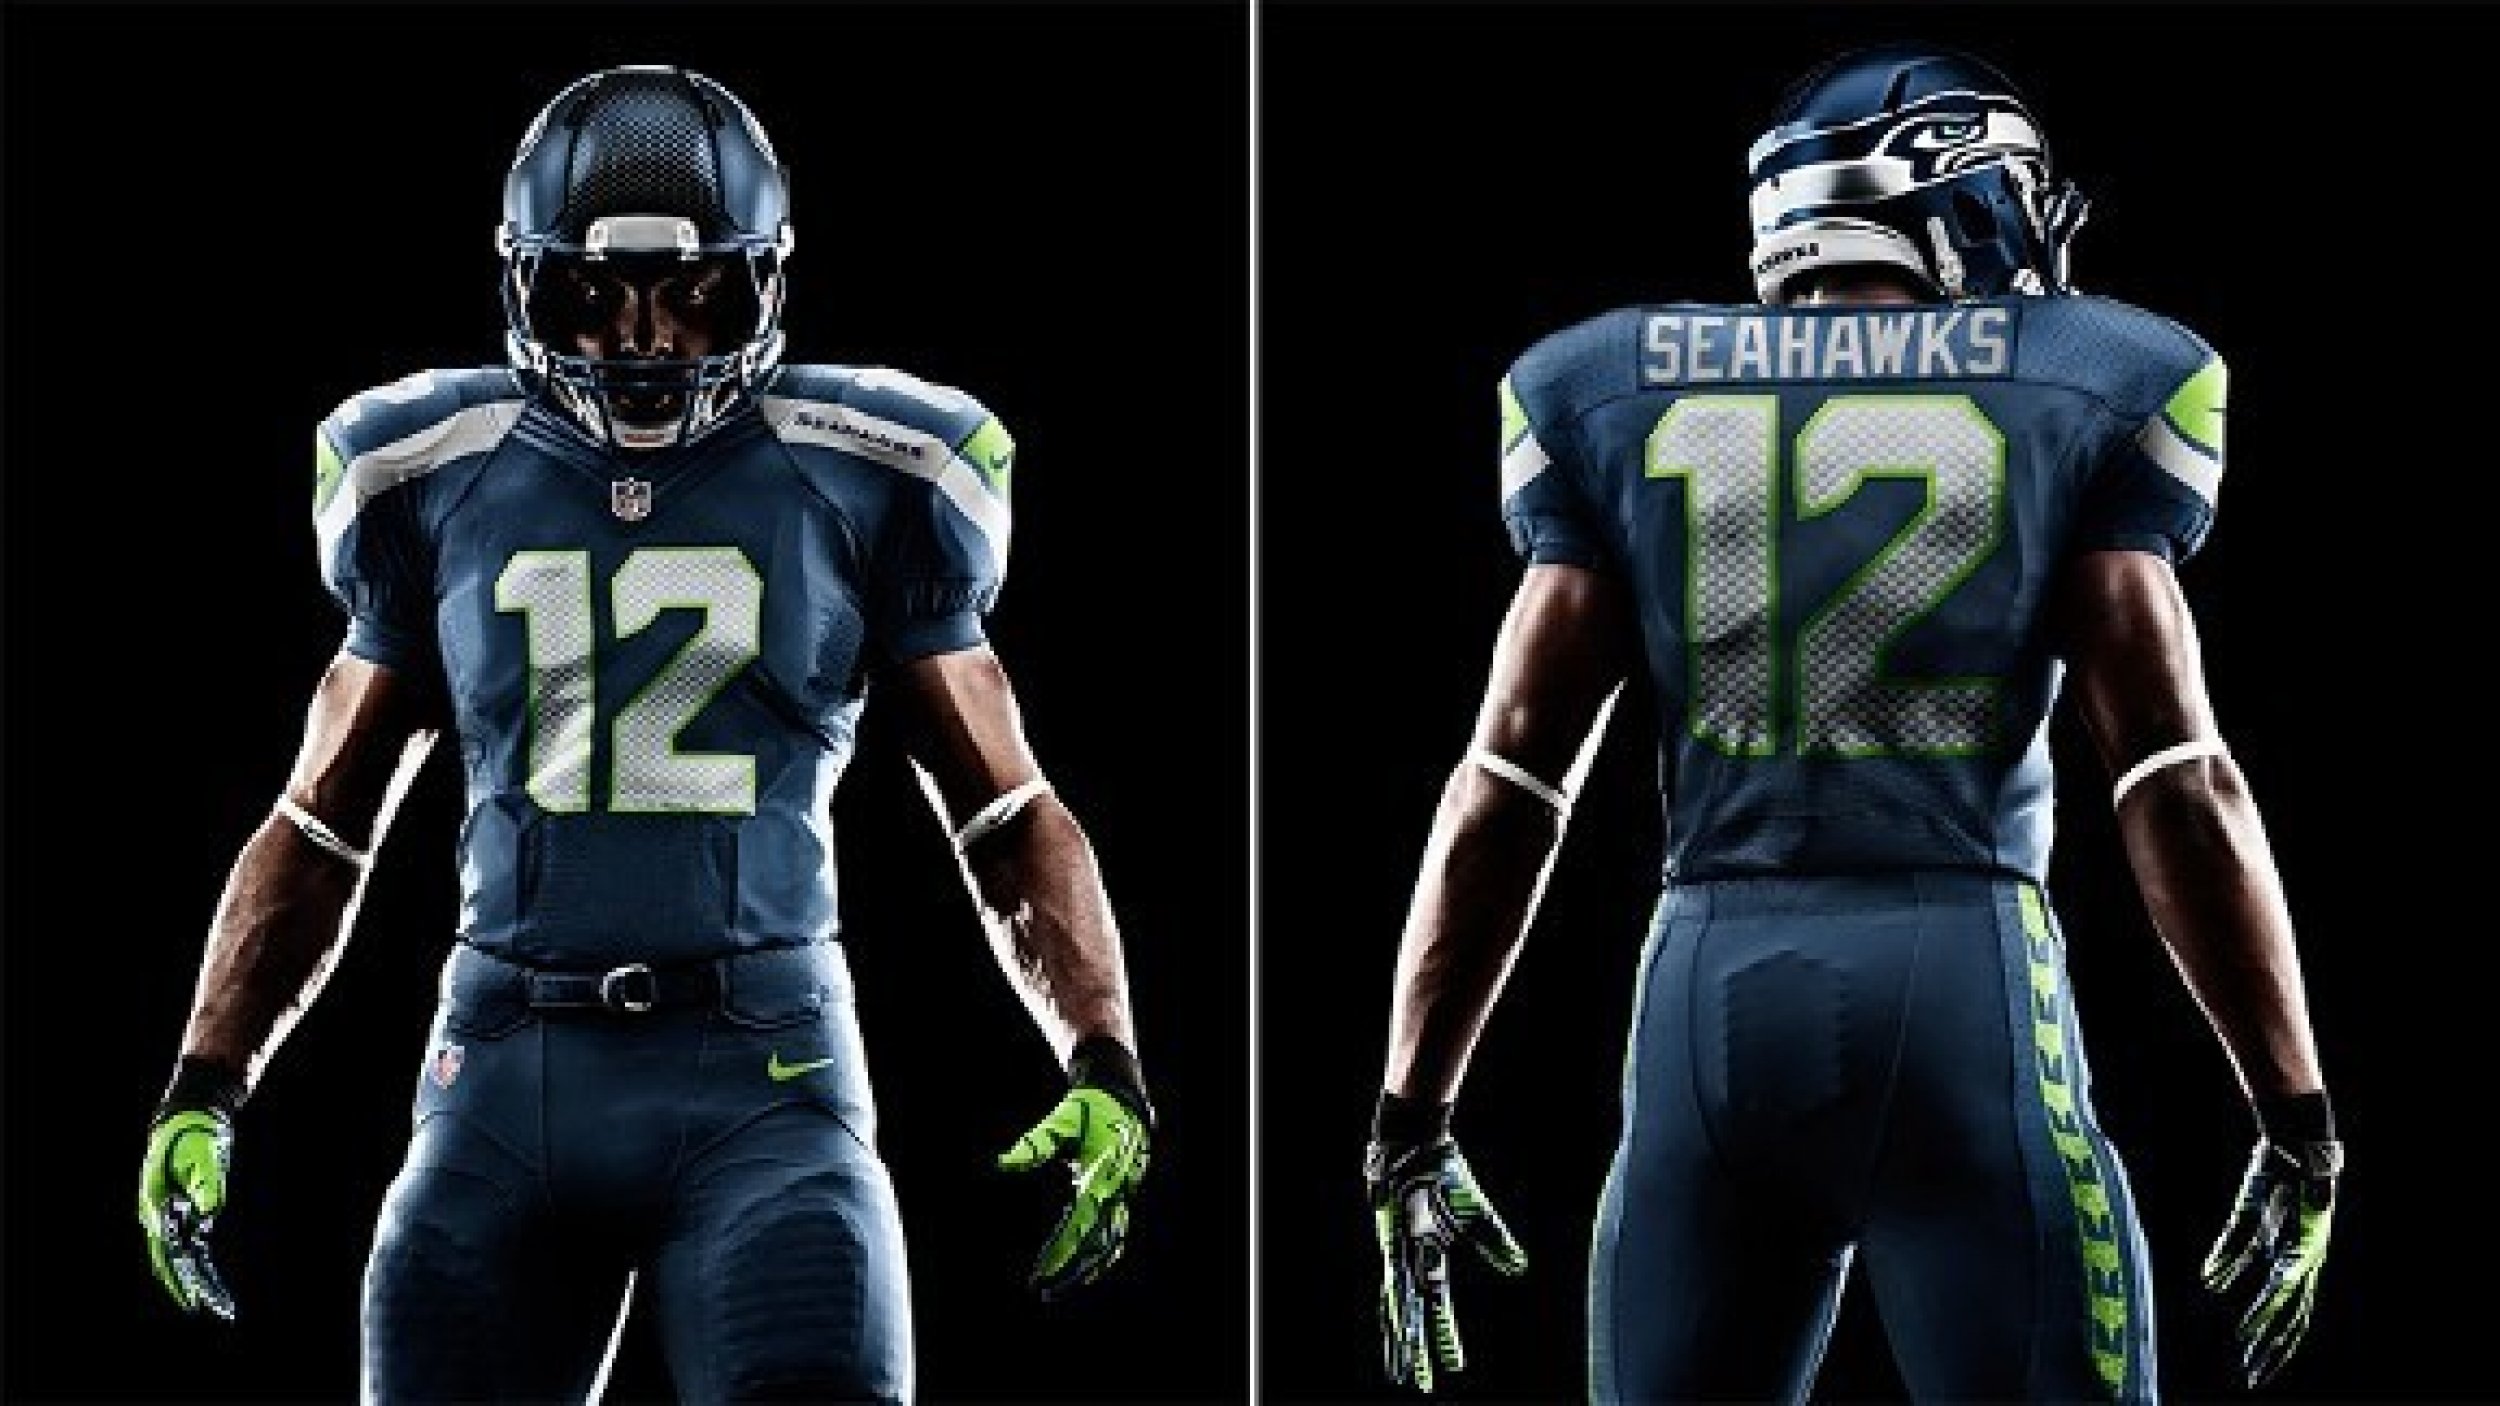 Seahawks Uniforms